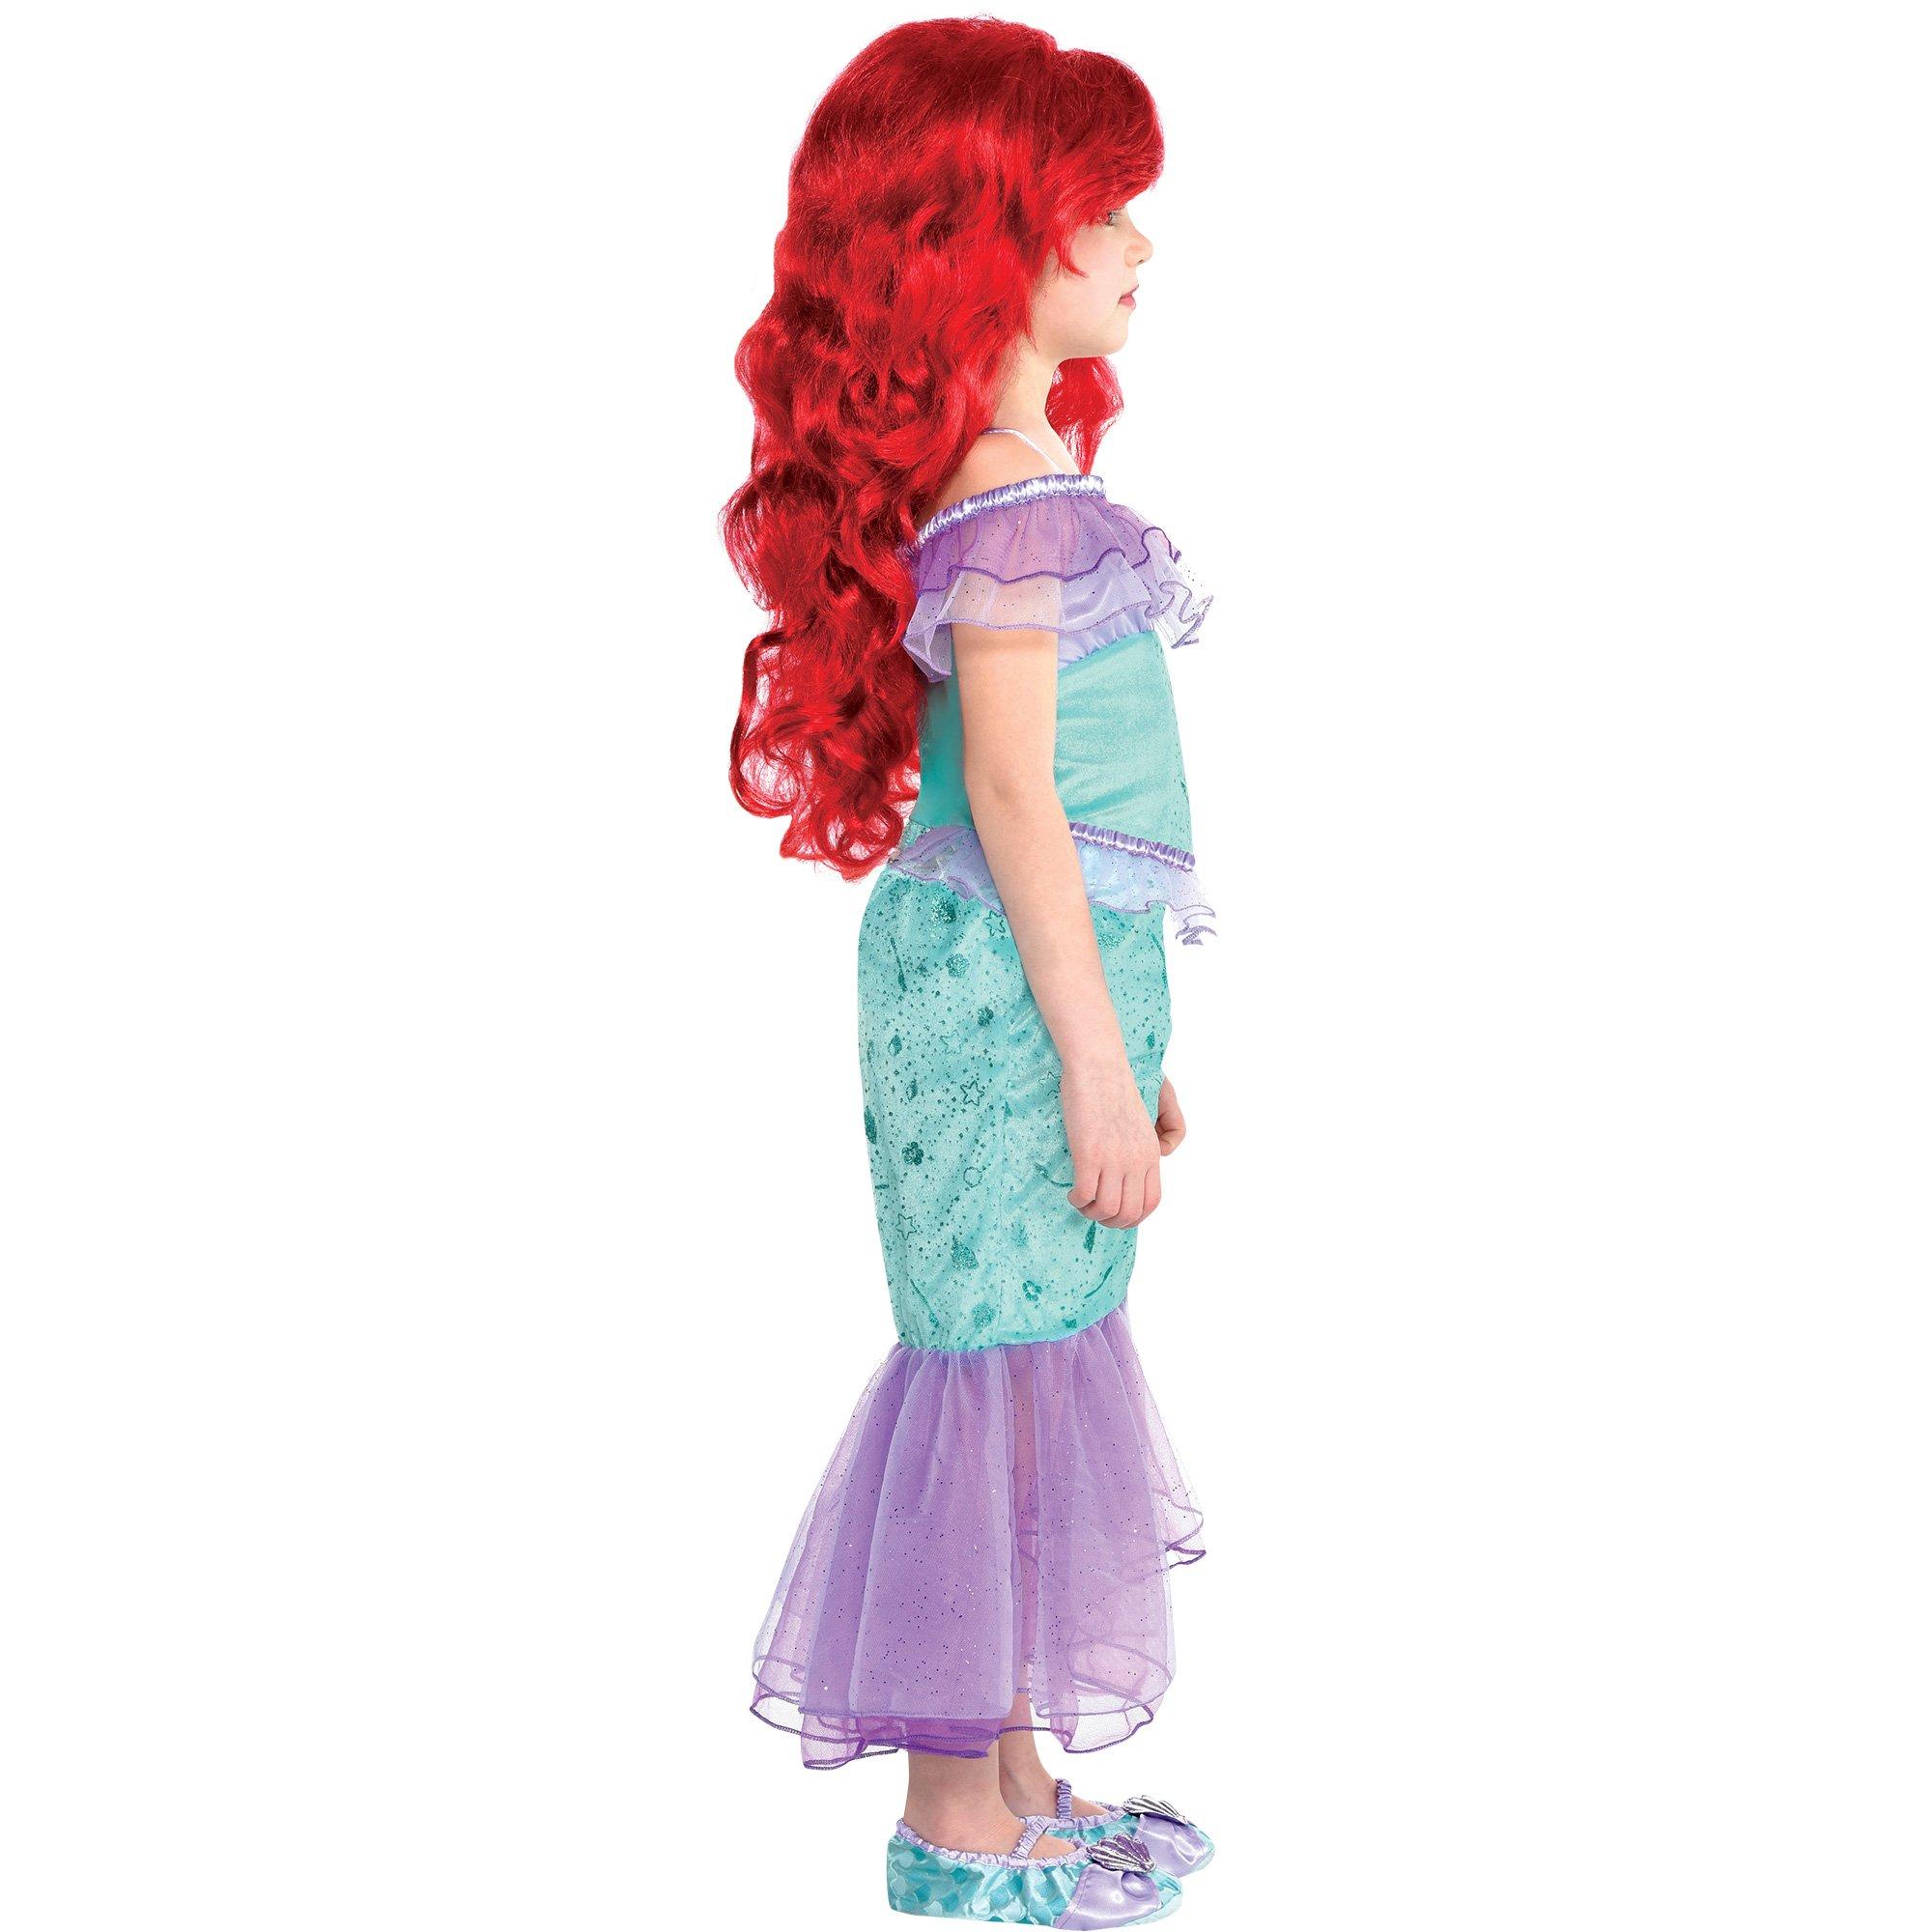 Kids' Ariel Costume - The Little Mermaid